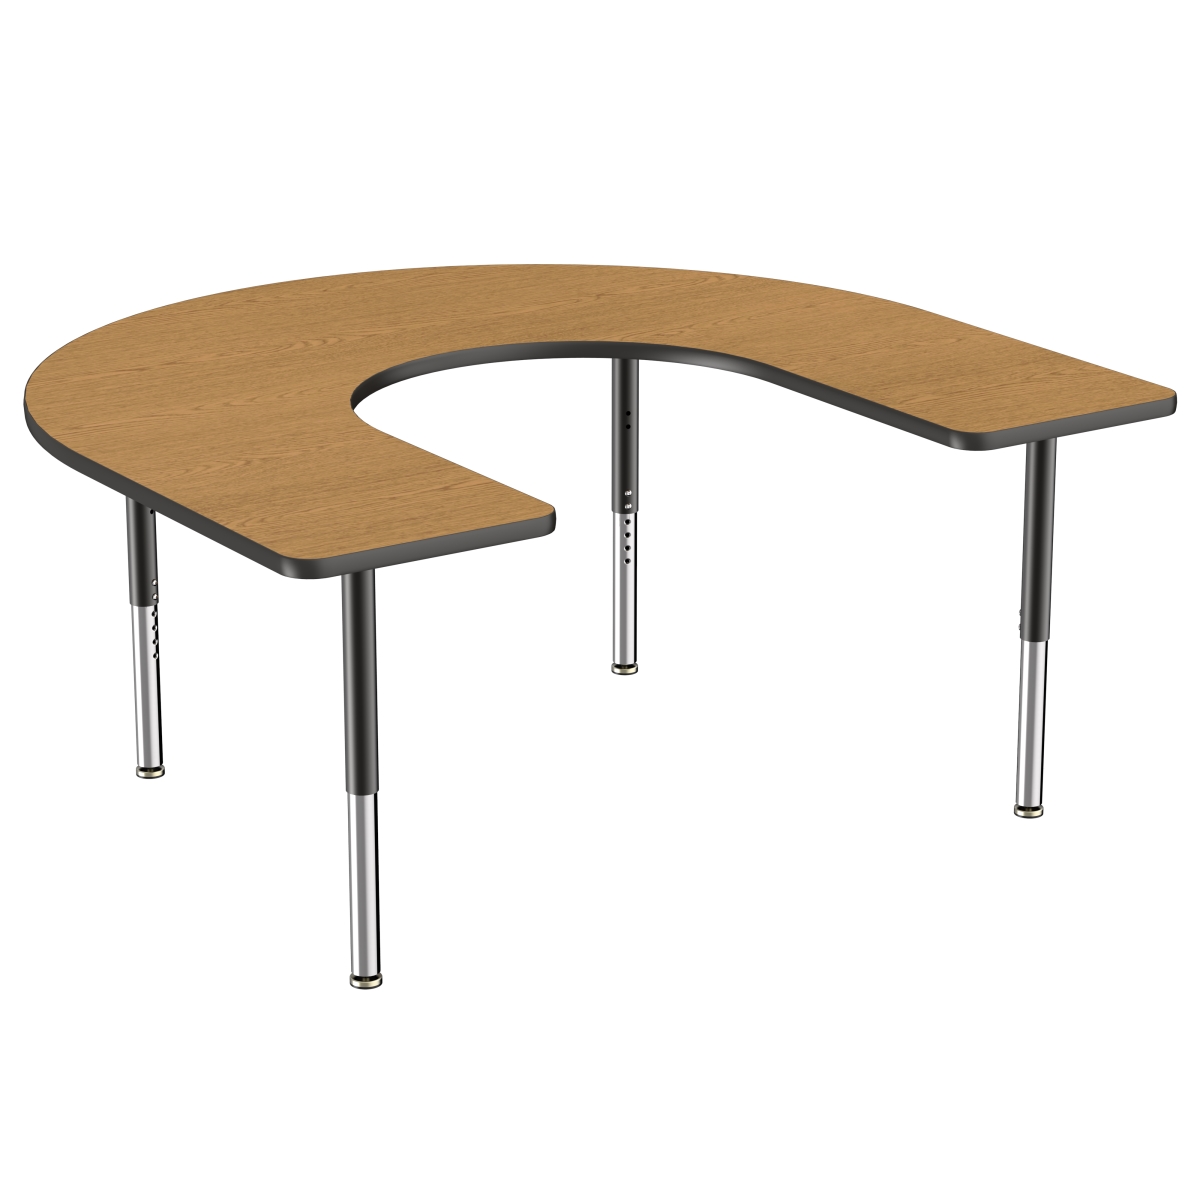 10096-okbk 60 X 66 In. Horseshoe T-mold Adjustable Activity Table With Super Leg - Oak & Black